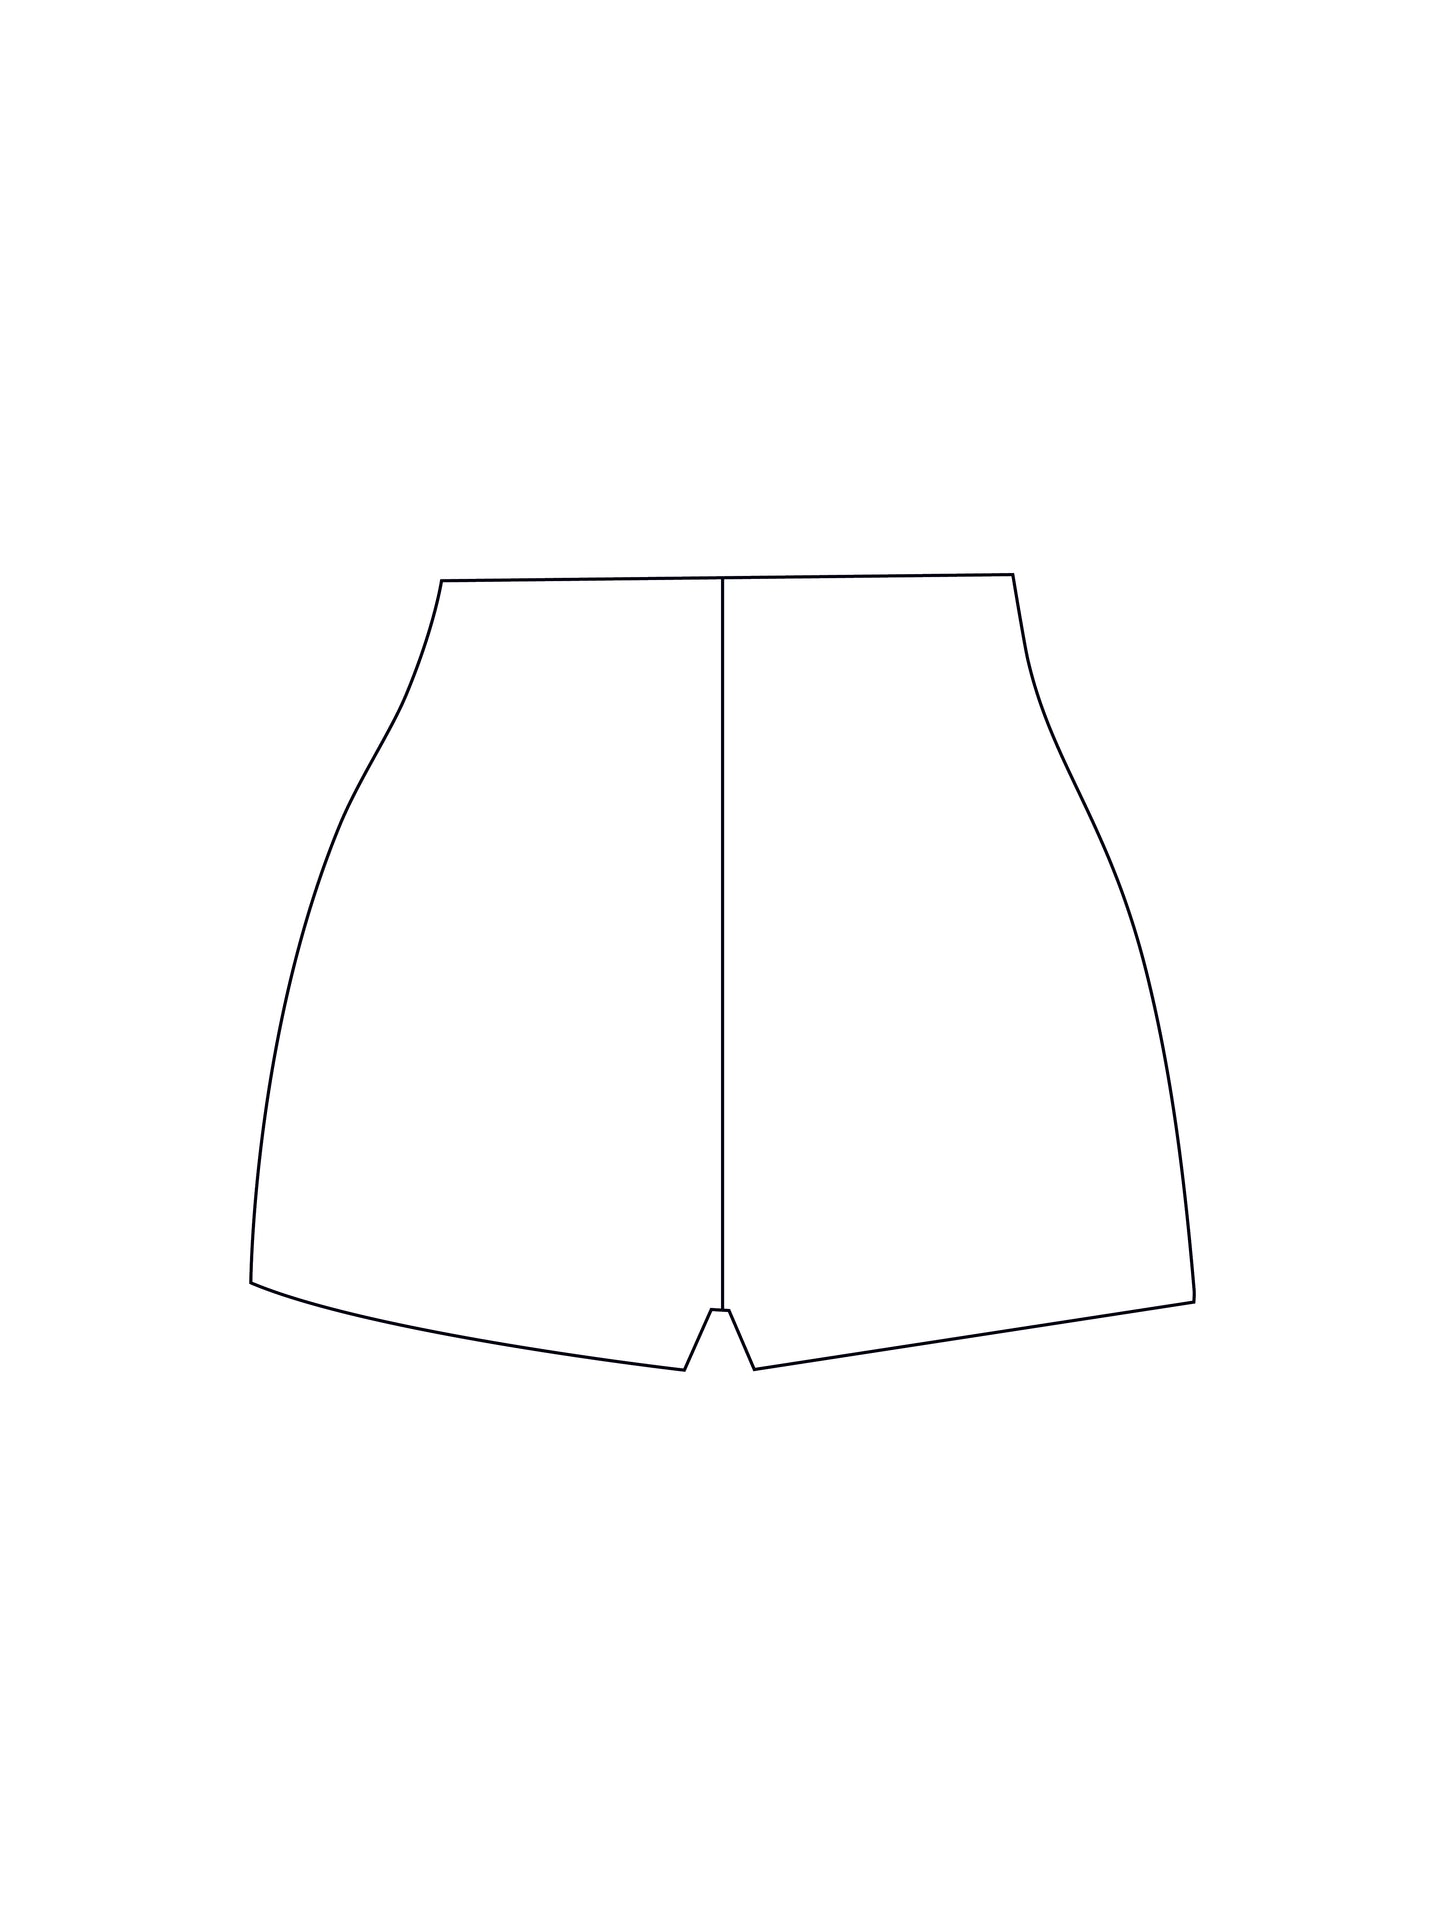 Custom half and half short shorts (inc mesh options)